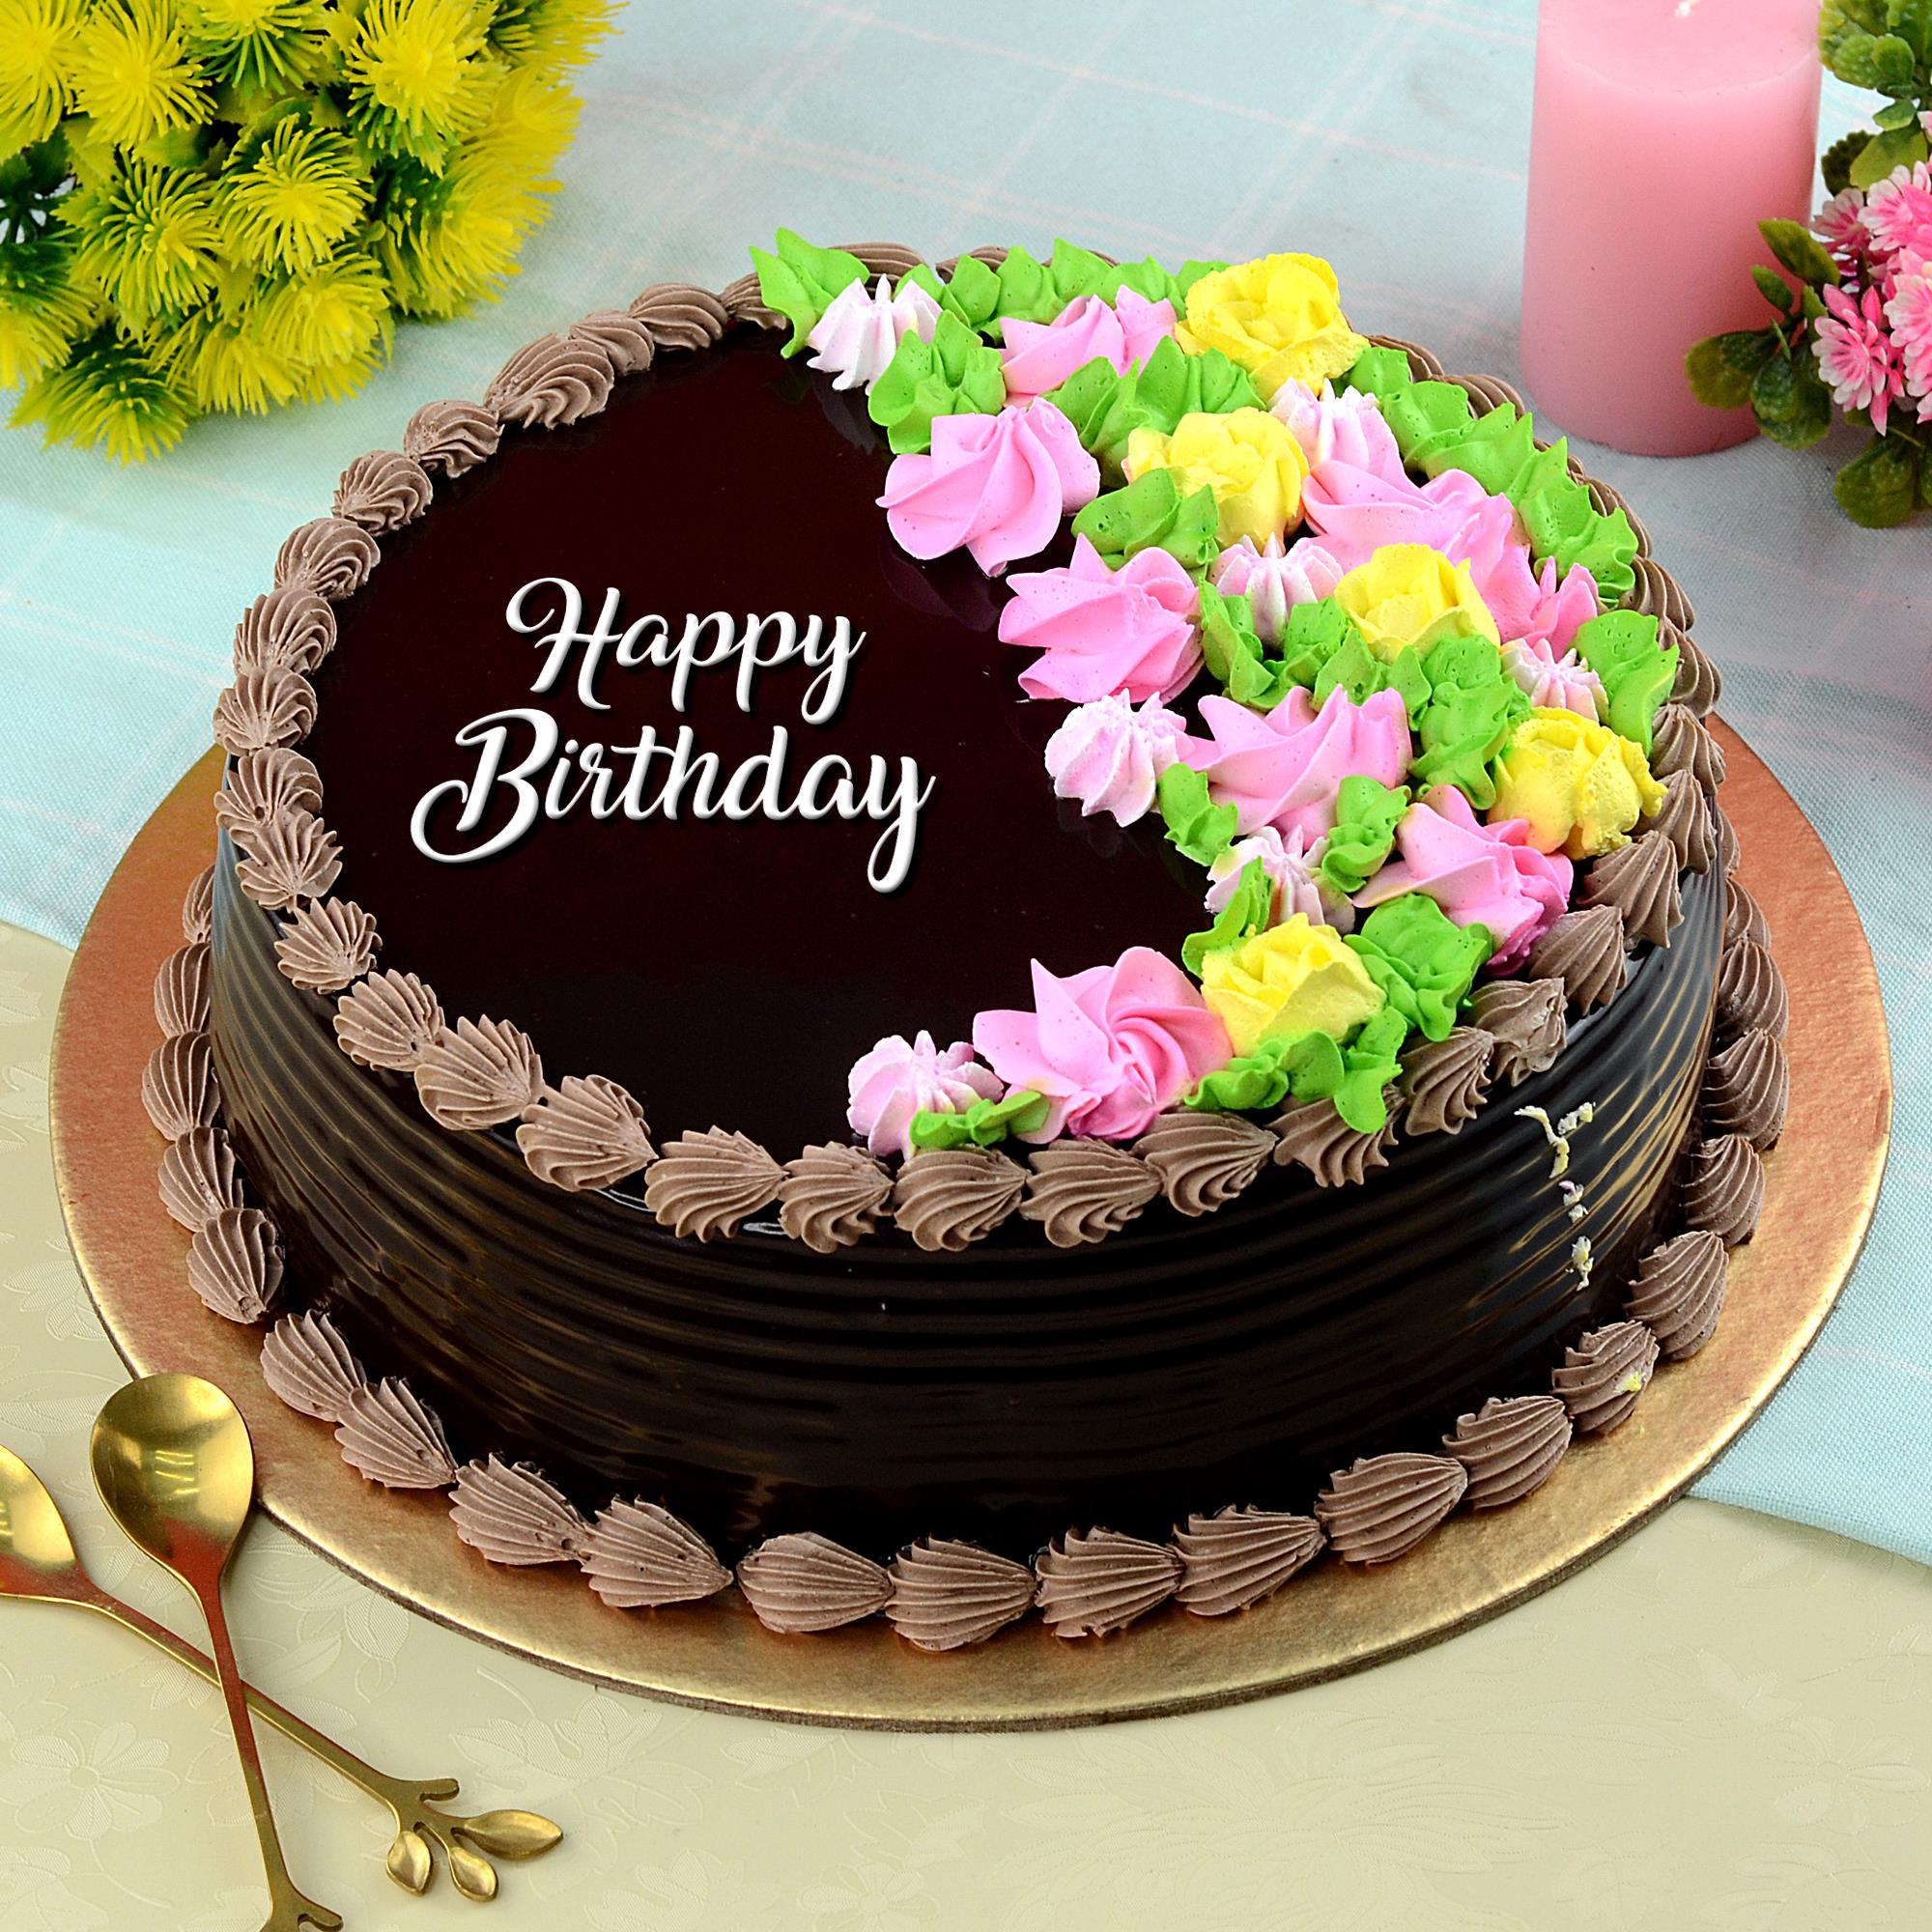 Happy Birthday Chocolate Cake - 2 Kg., Cakes on Birthdays